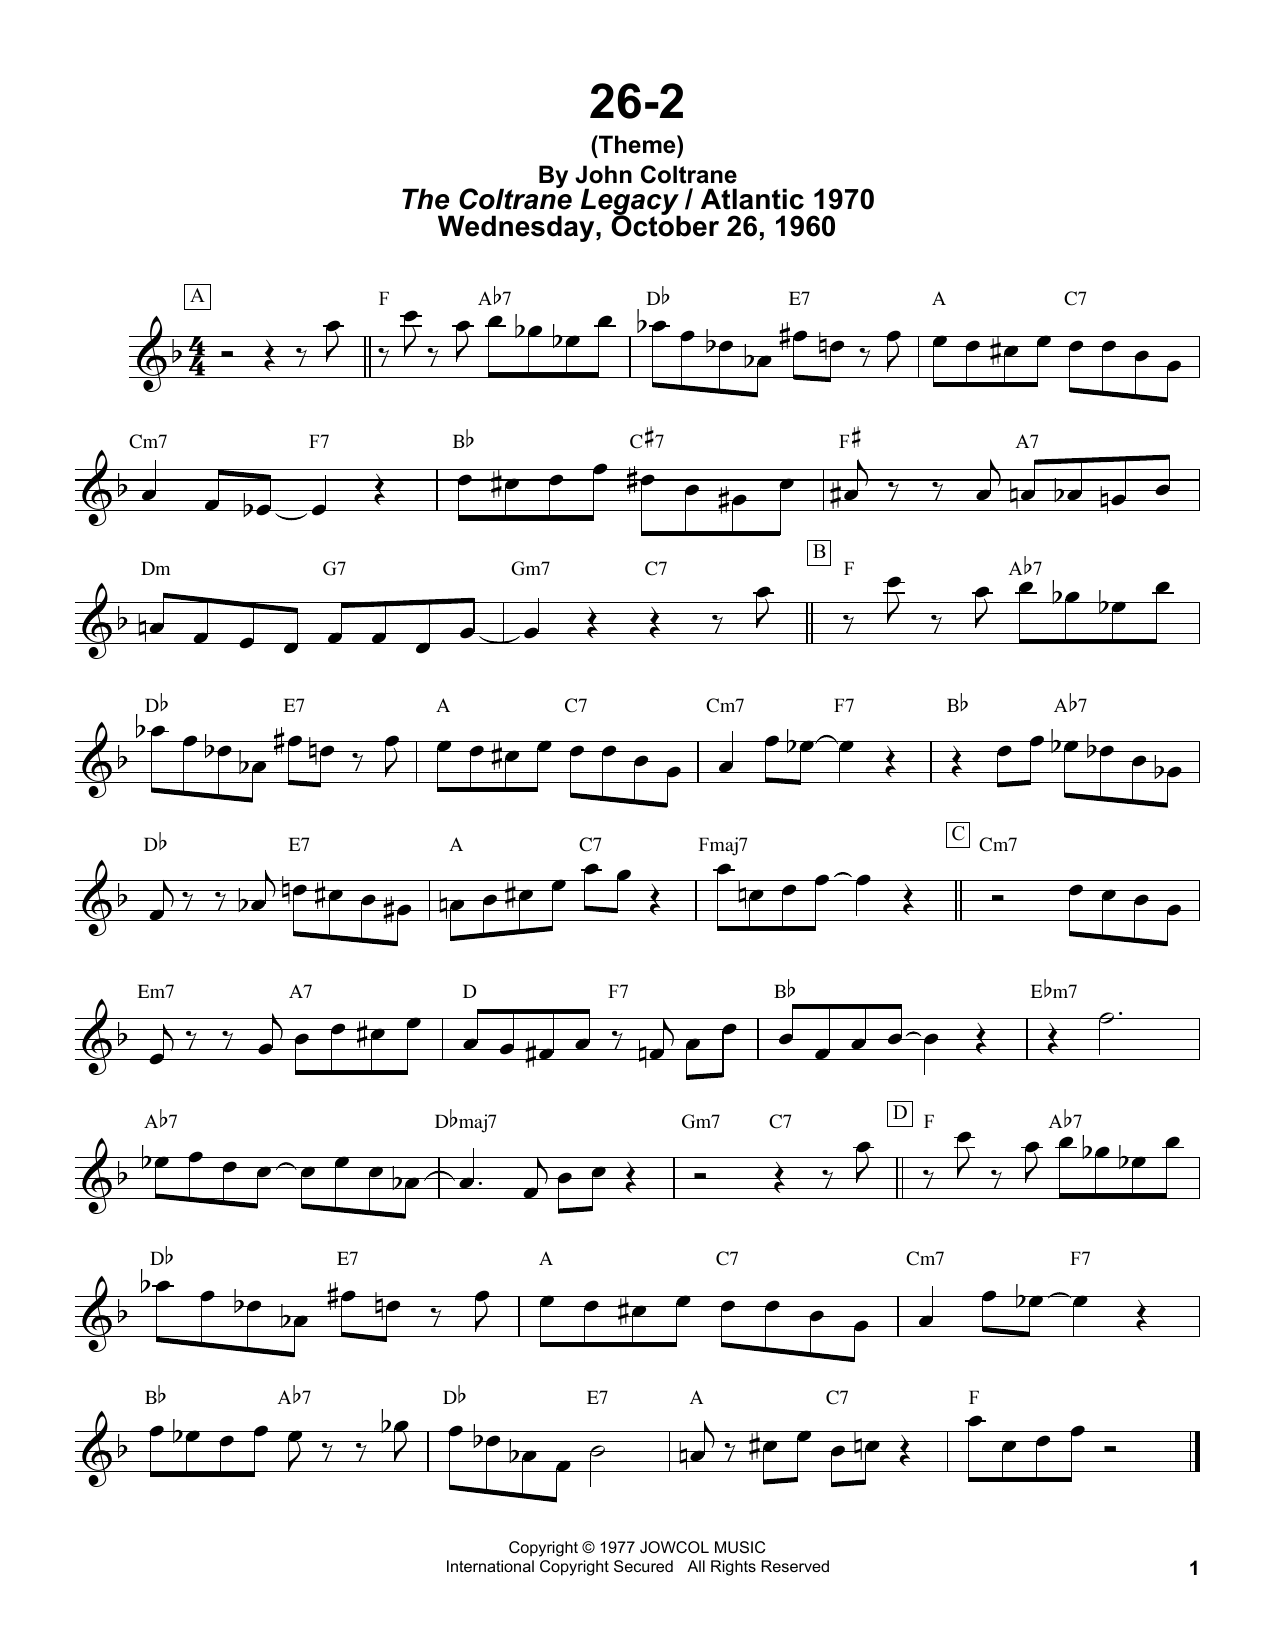 John Coltrane 26-2 Sheet Music Notes & Chords for Tenor Sax Transcription - Download or Print PDF